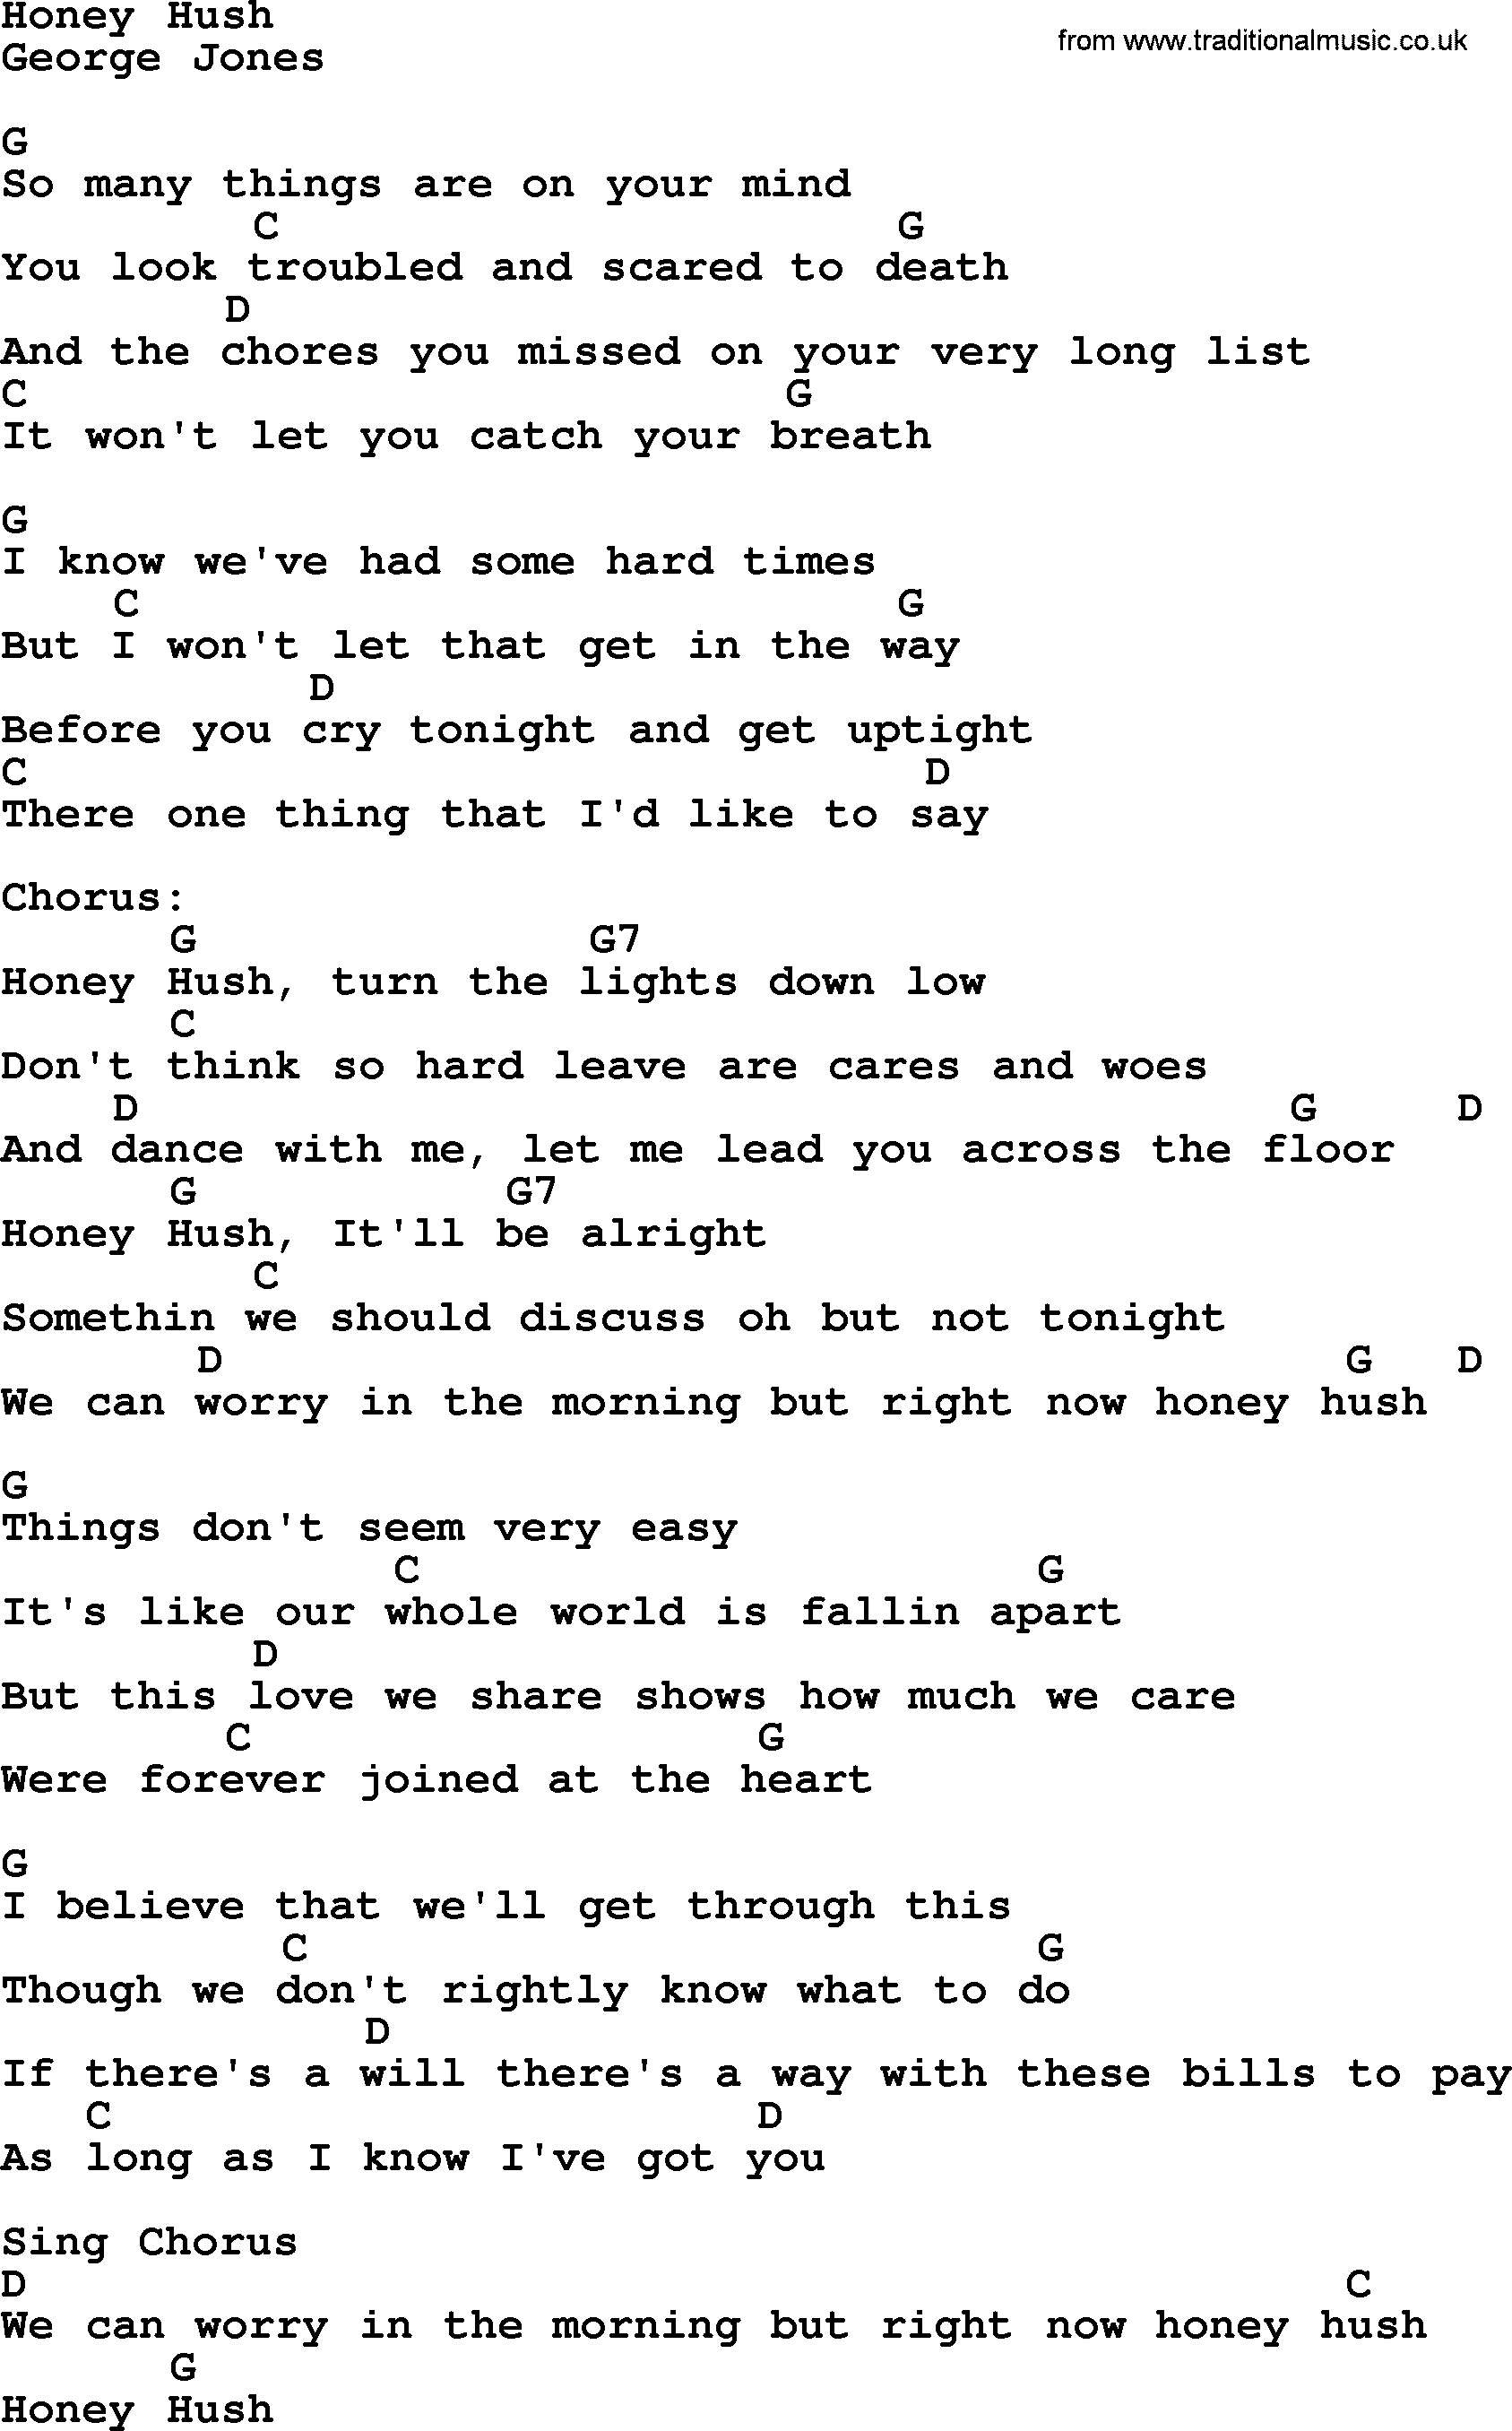 George Jones song: Honey Hush, lyrics and chords